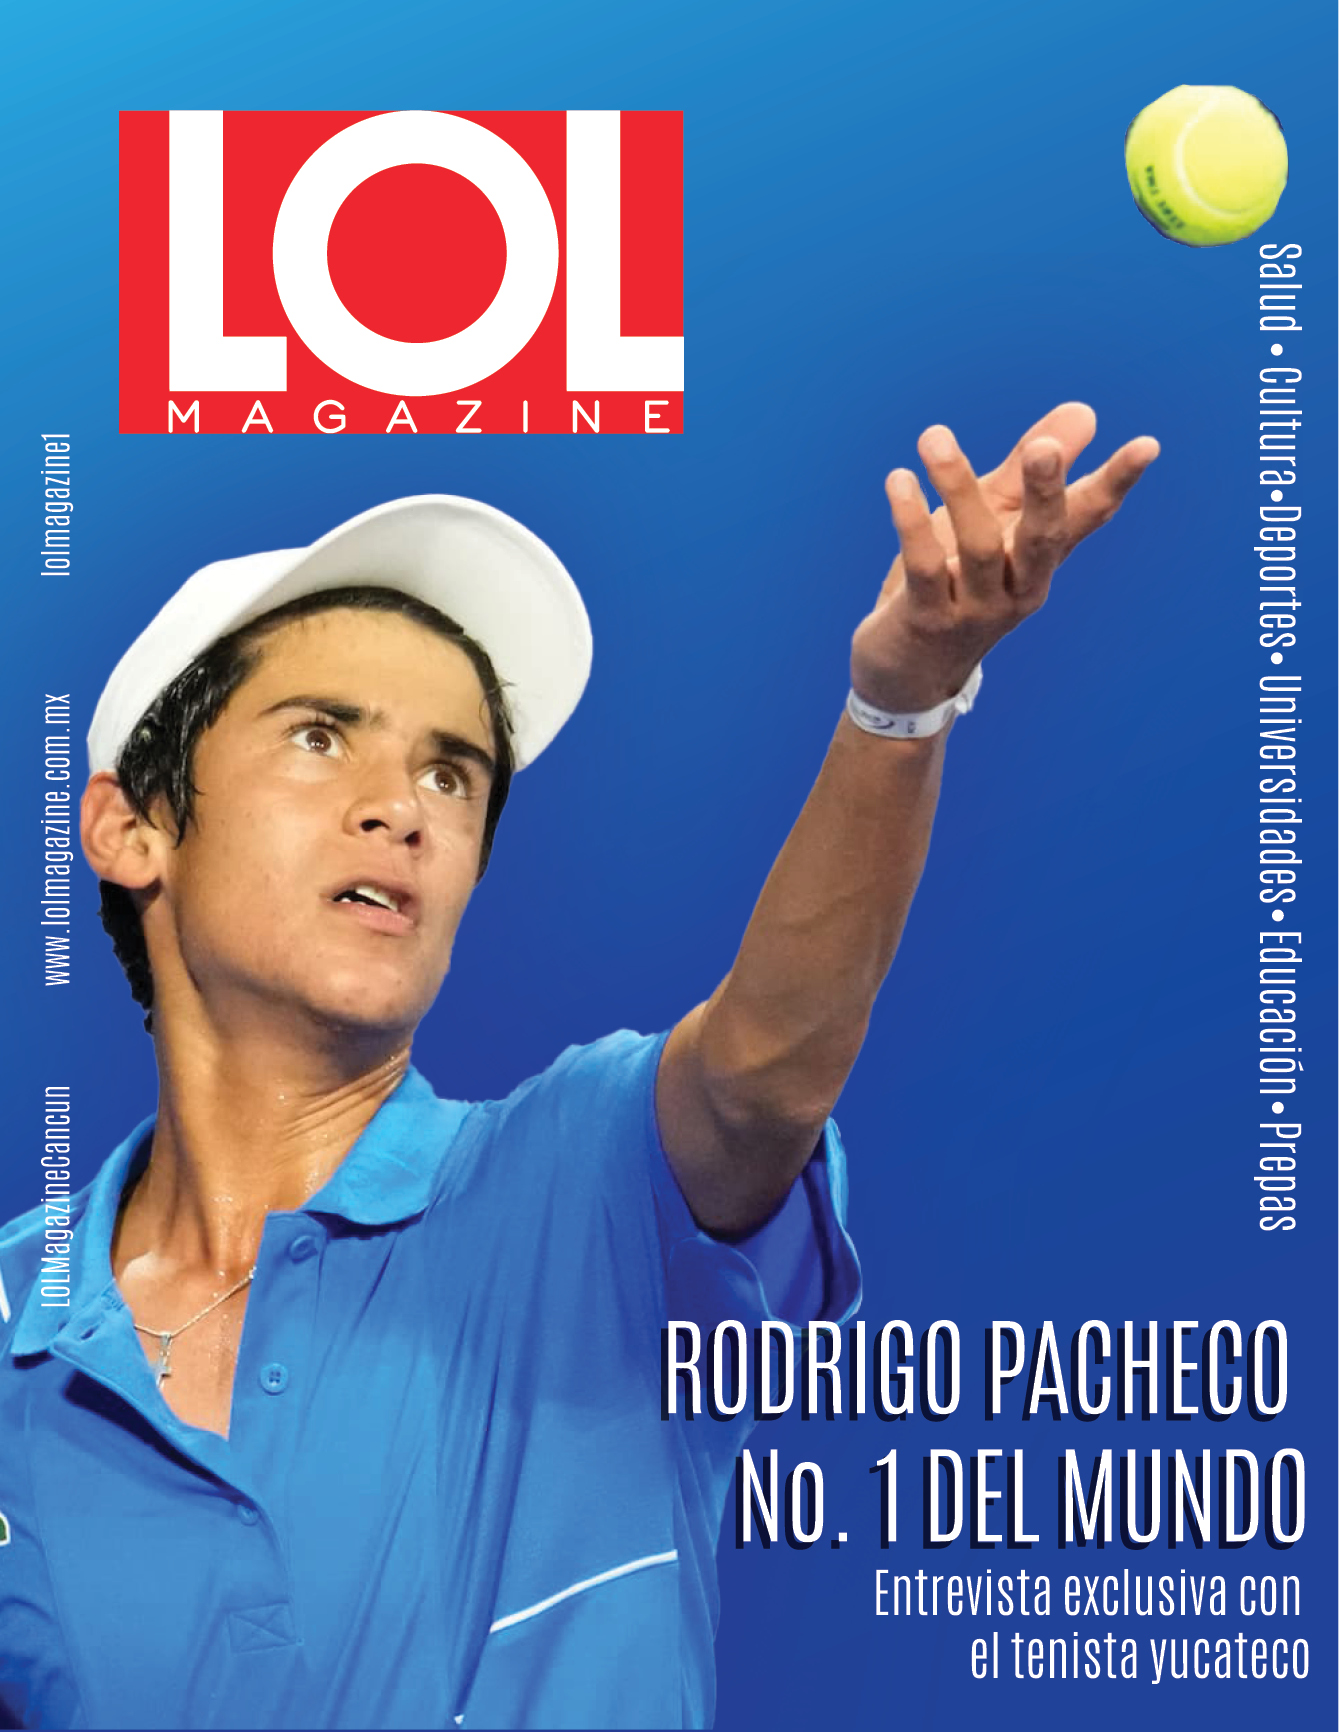 Rodrigo Pacheco, campeón mundial de tenis